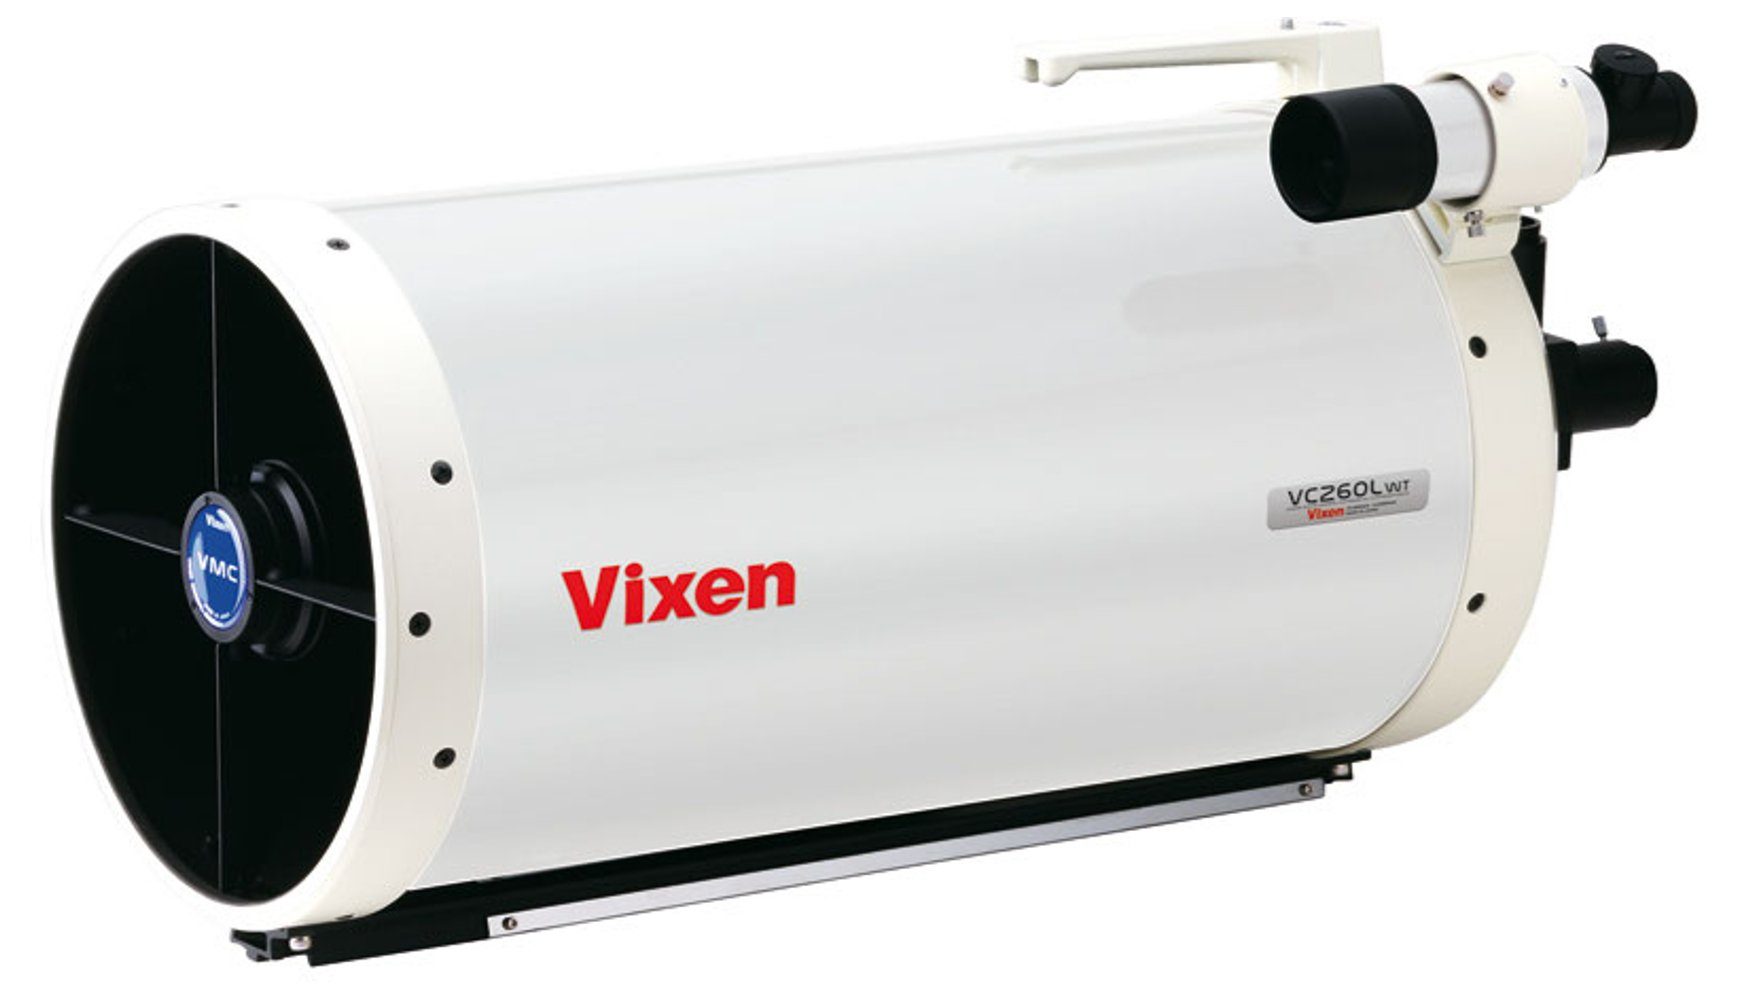 VMC260L Version) Vixen (AXD Teleskop Maksutov-Cassegrain-